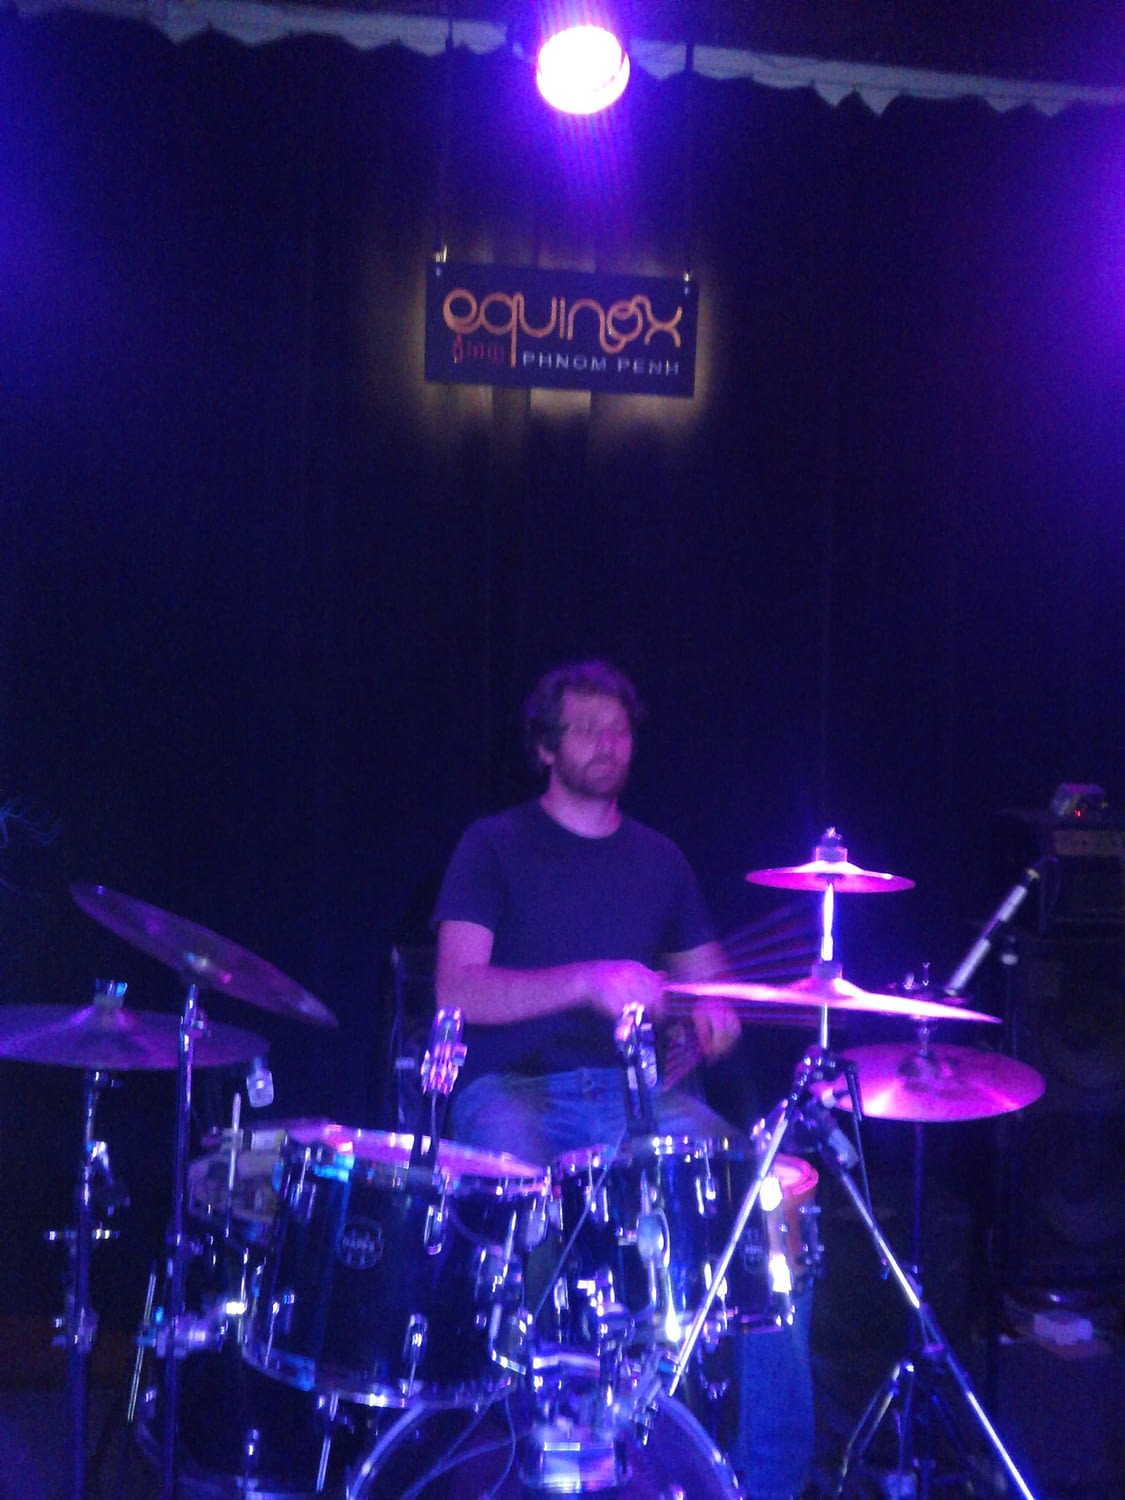 Greg Lavender playing drums at Equinox.